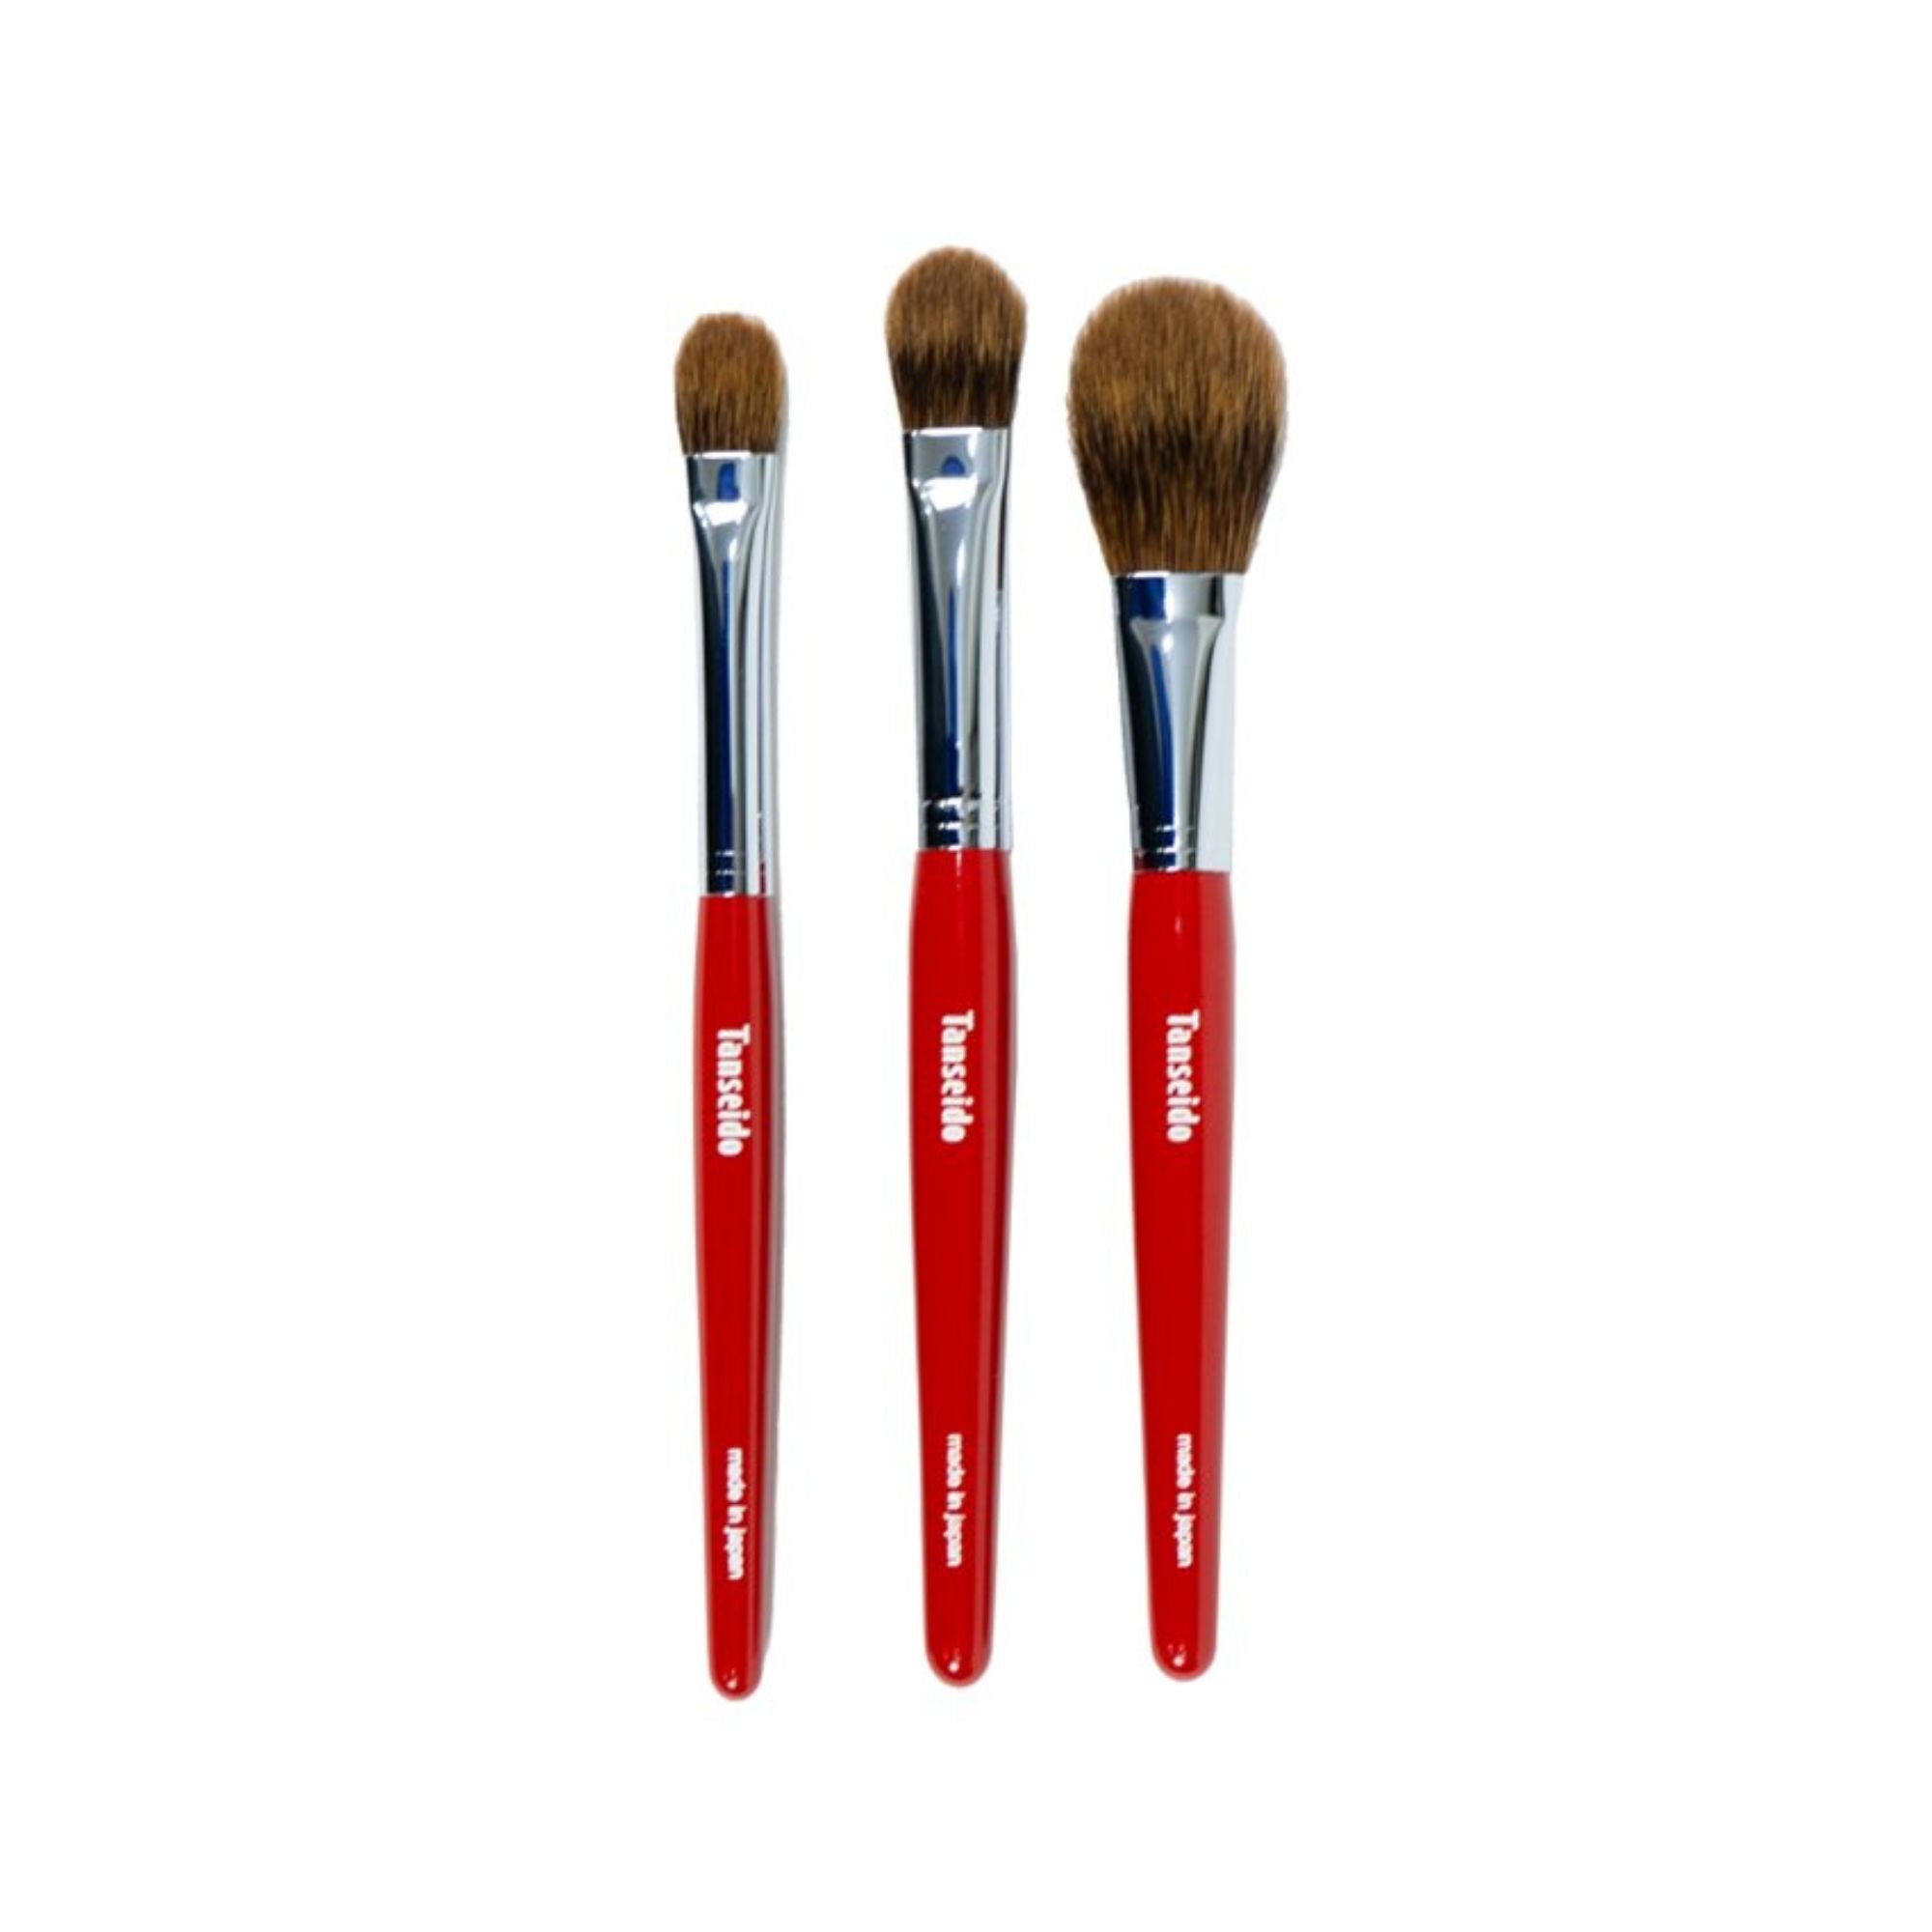 Tanseido CQ 14SP Eyeshadow Brush - Fude Beauty, Japanese Makeup Brushes